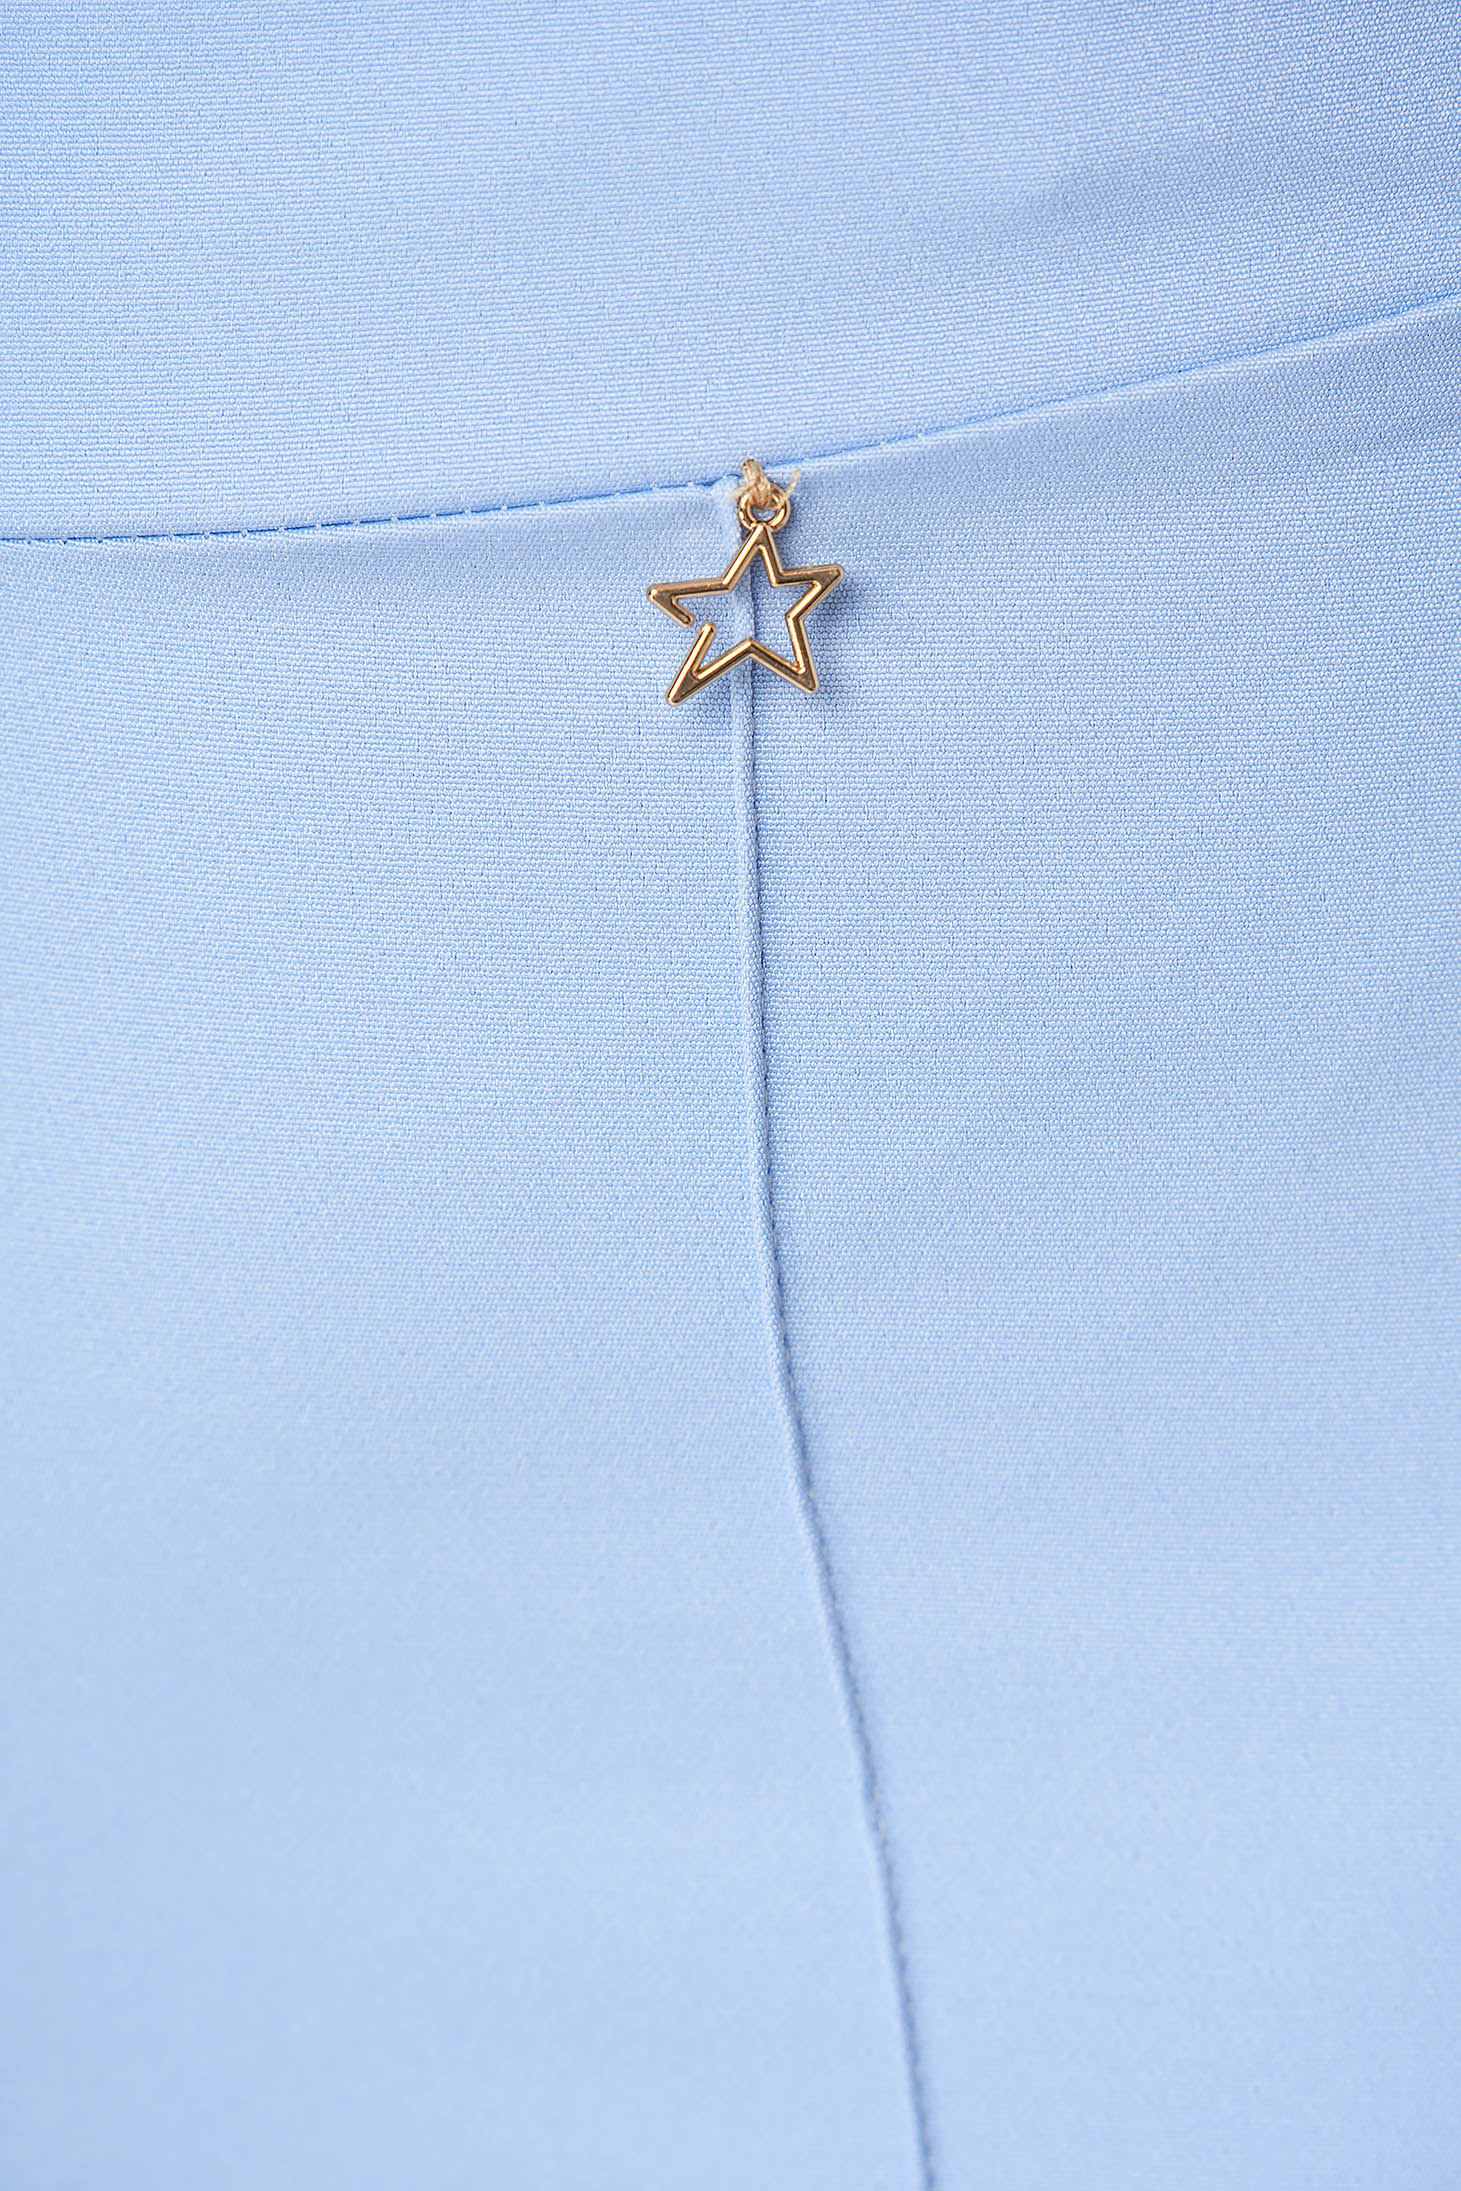 Pantaloni din stofa usor elastica albastru-deschis conici cu talie inalta - StarShinerS 6 - StarShinerS.ro